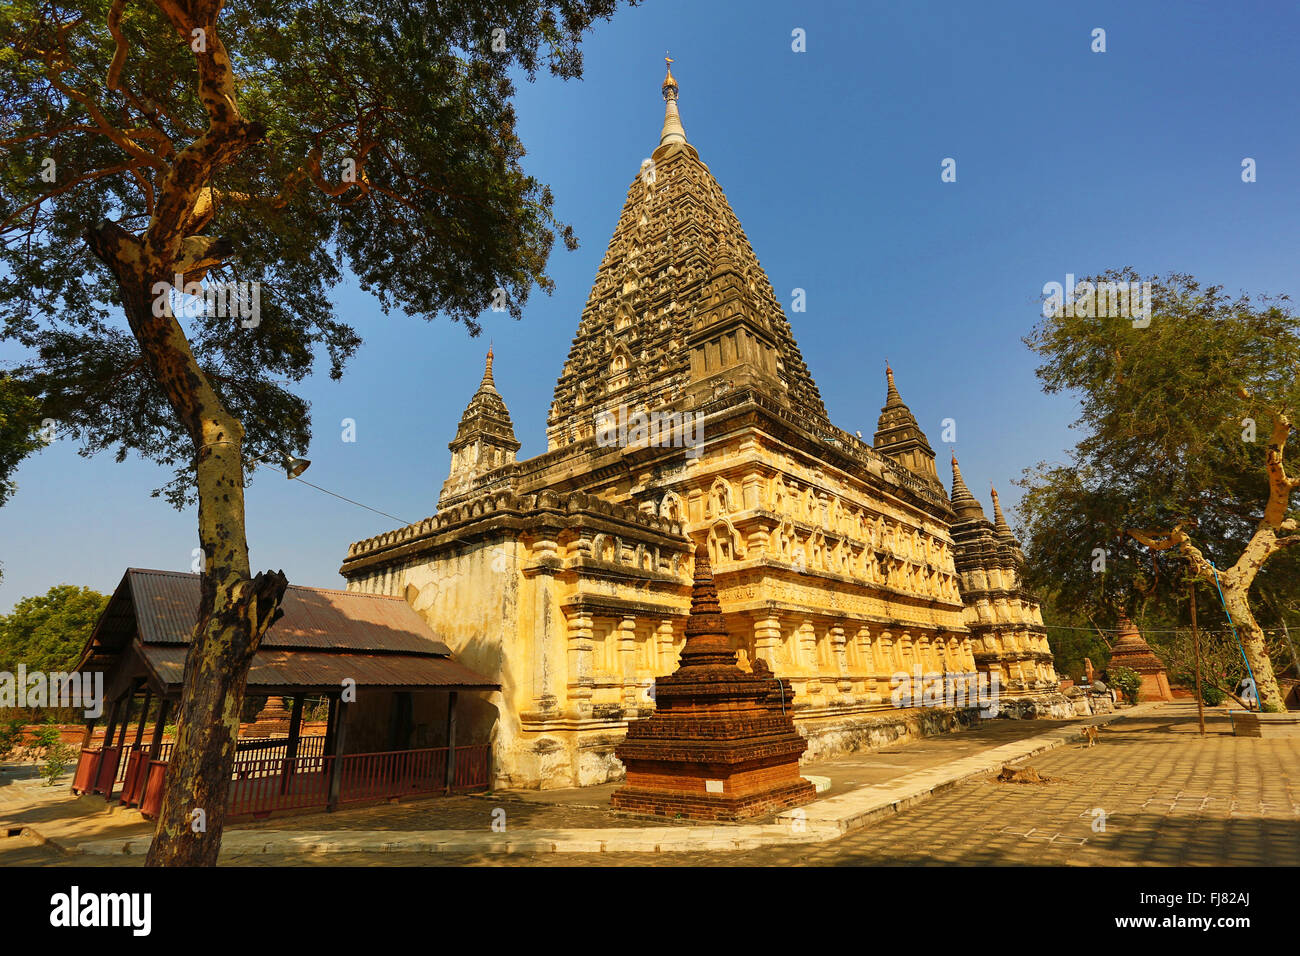 Mahabodhi Pagoda in Old Bagan, Bagan, Myanmar (Burma) Stock Photo